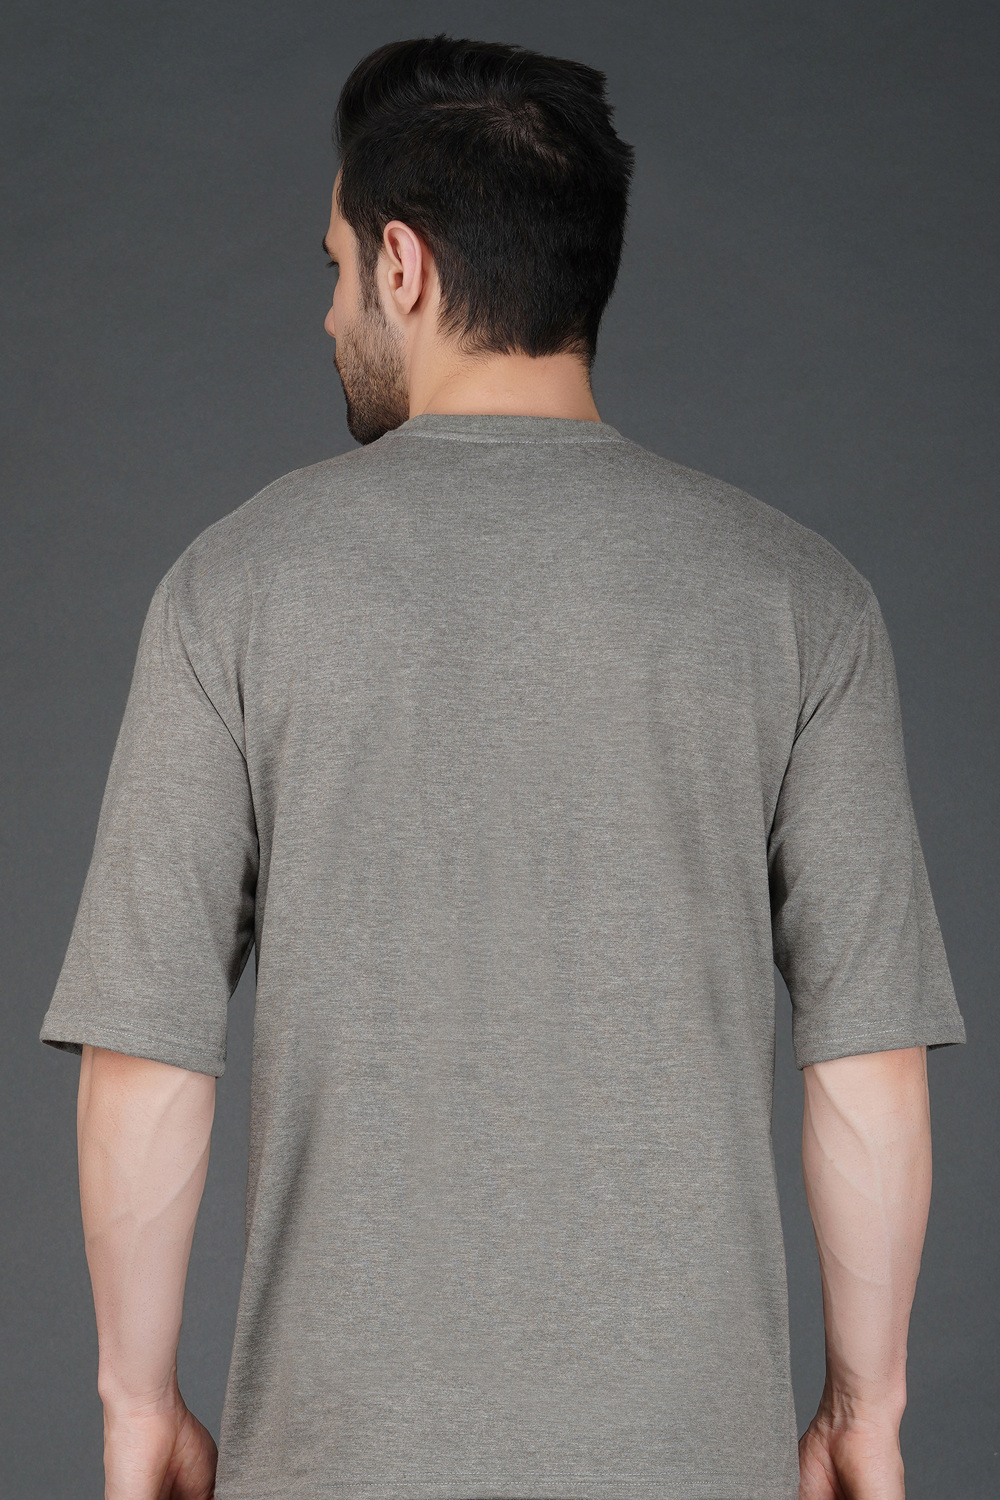 Aisthetikos Mens Oversized Tshirt (Grey)